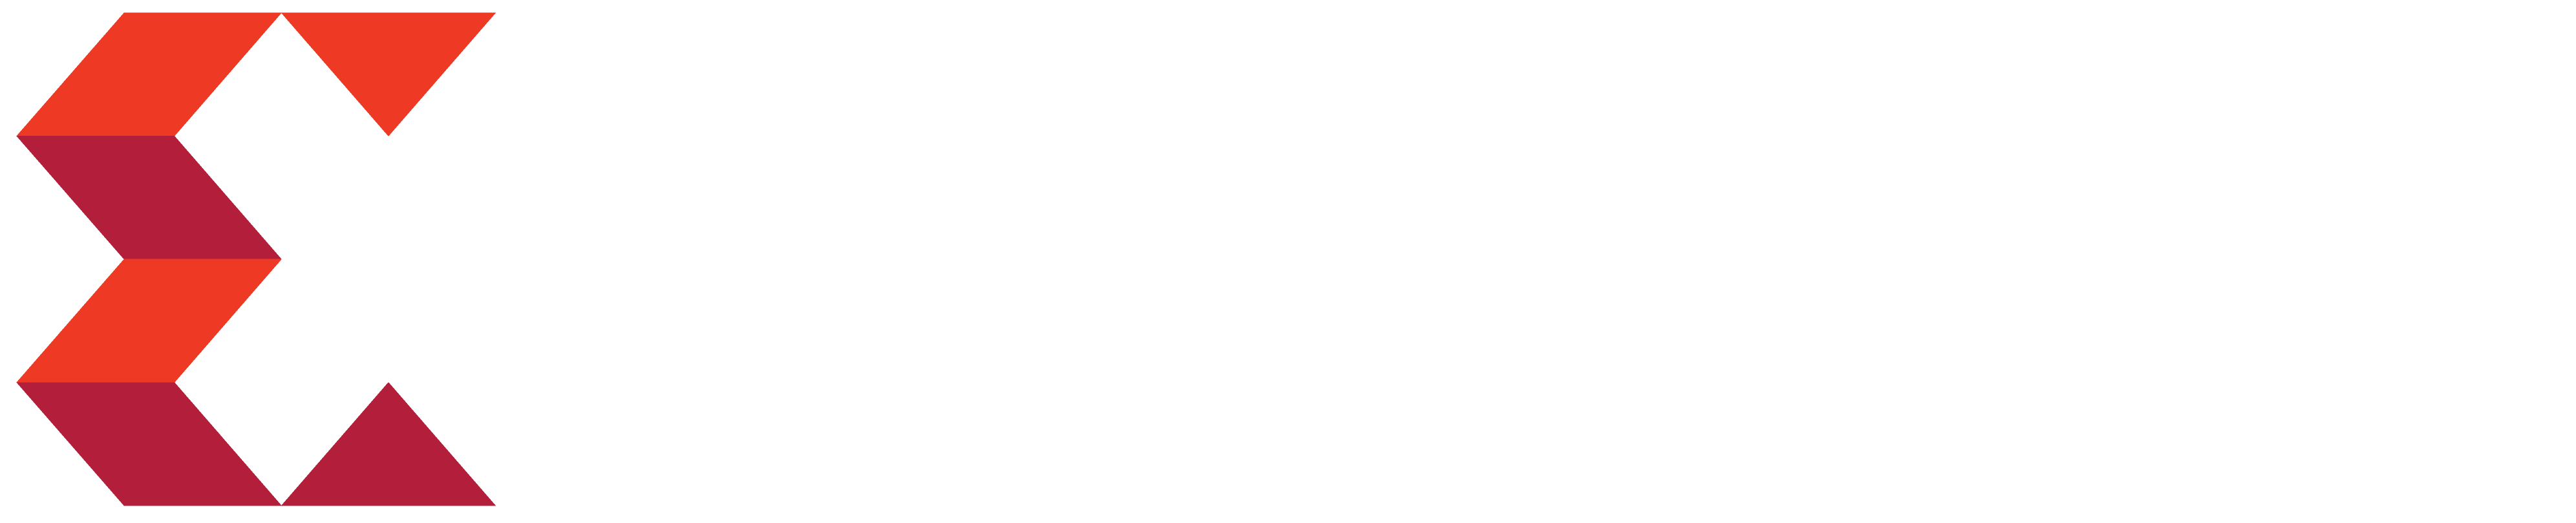 Xilinx Logo - Job Search